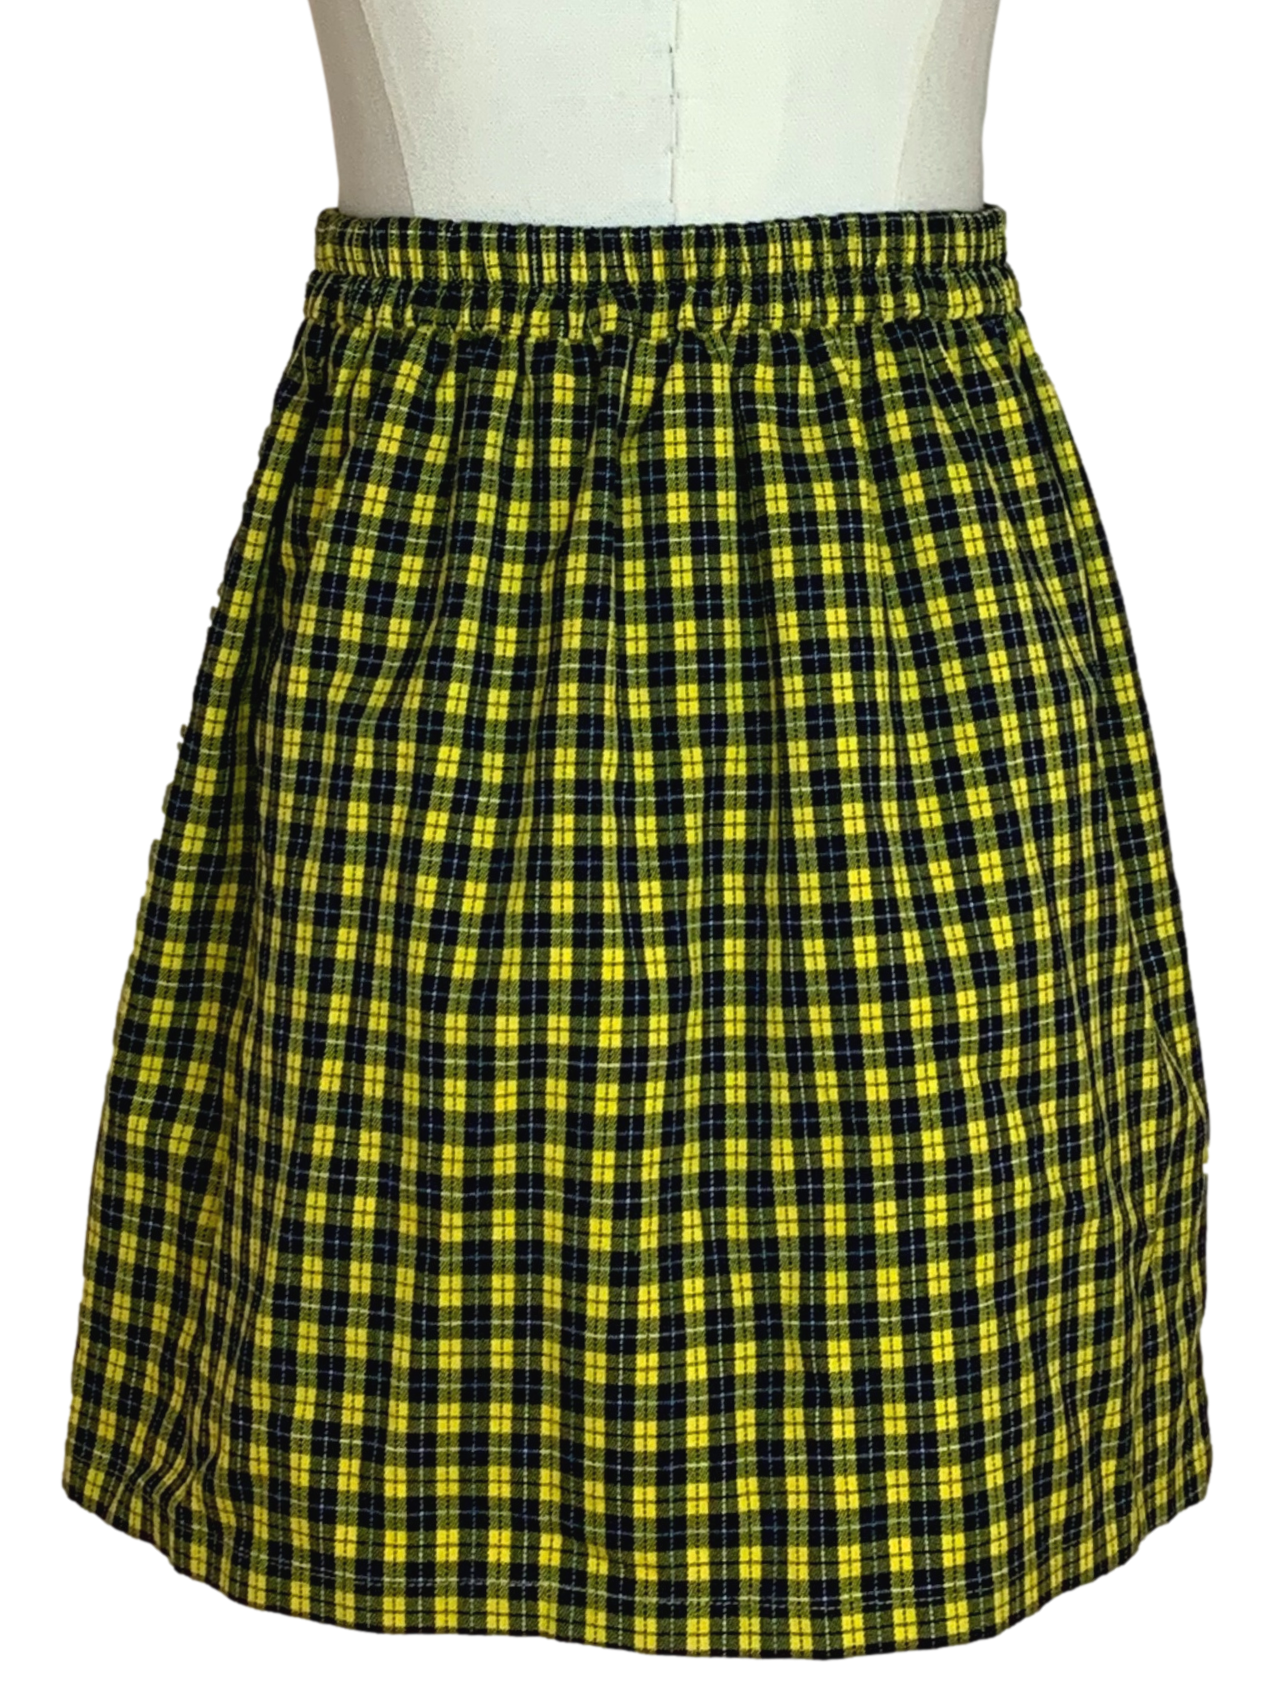 Pineapple Yellow Tartan Skirt